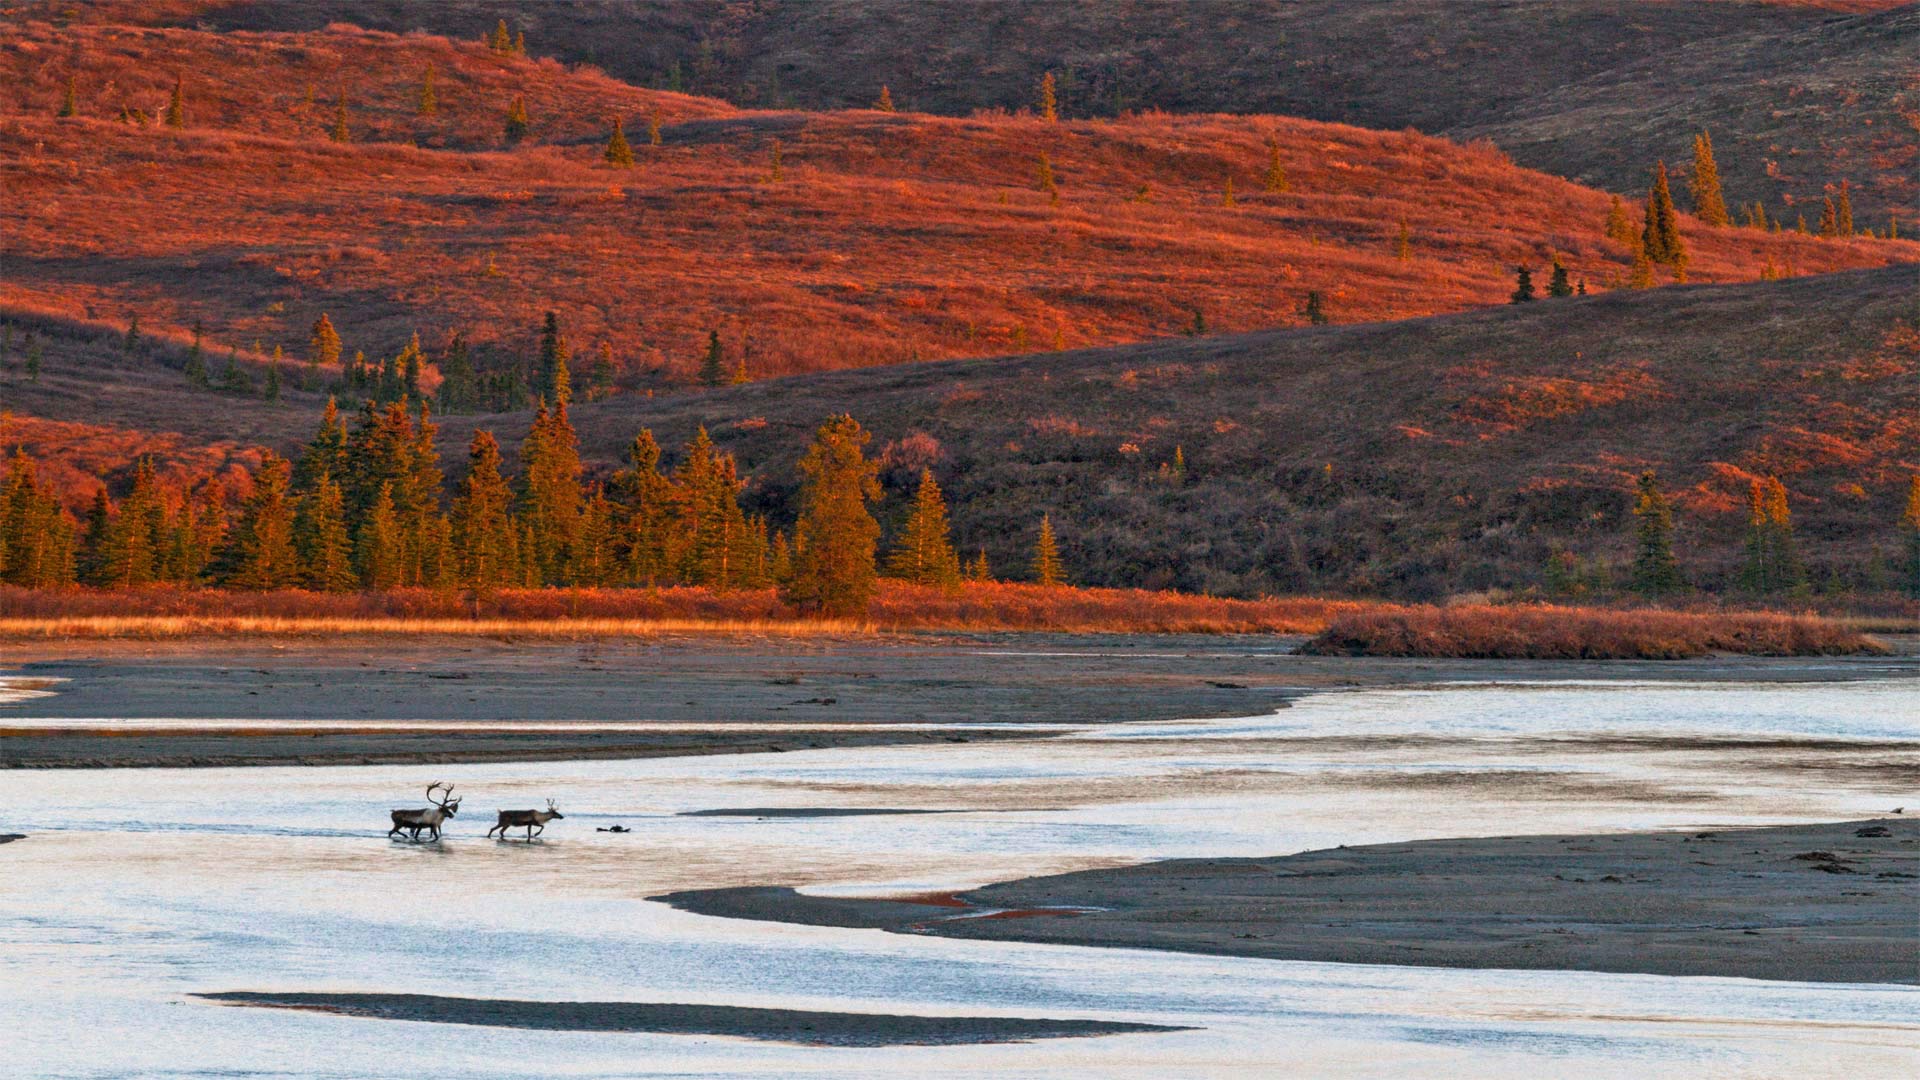 Caribou crossing the Susitna River during autumn, Alaska - Tim Plowden/Alamy)